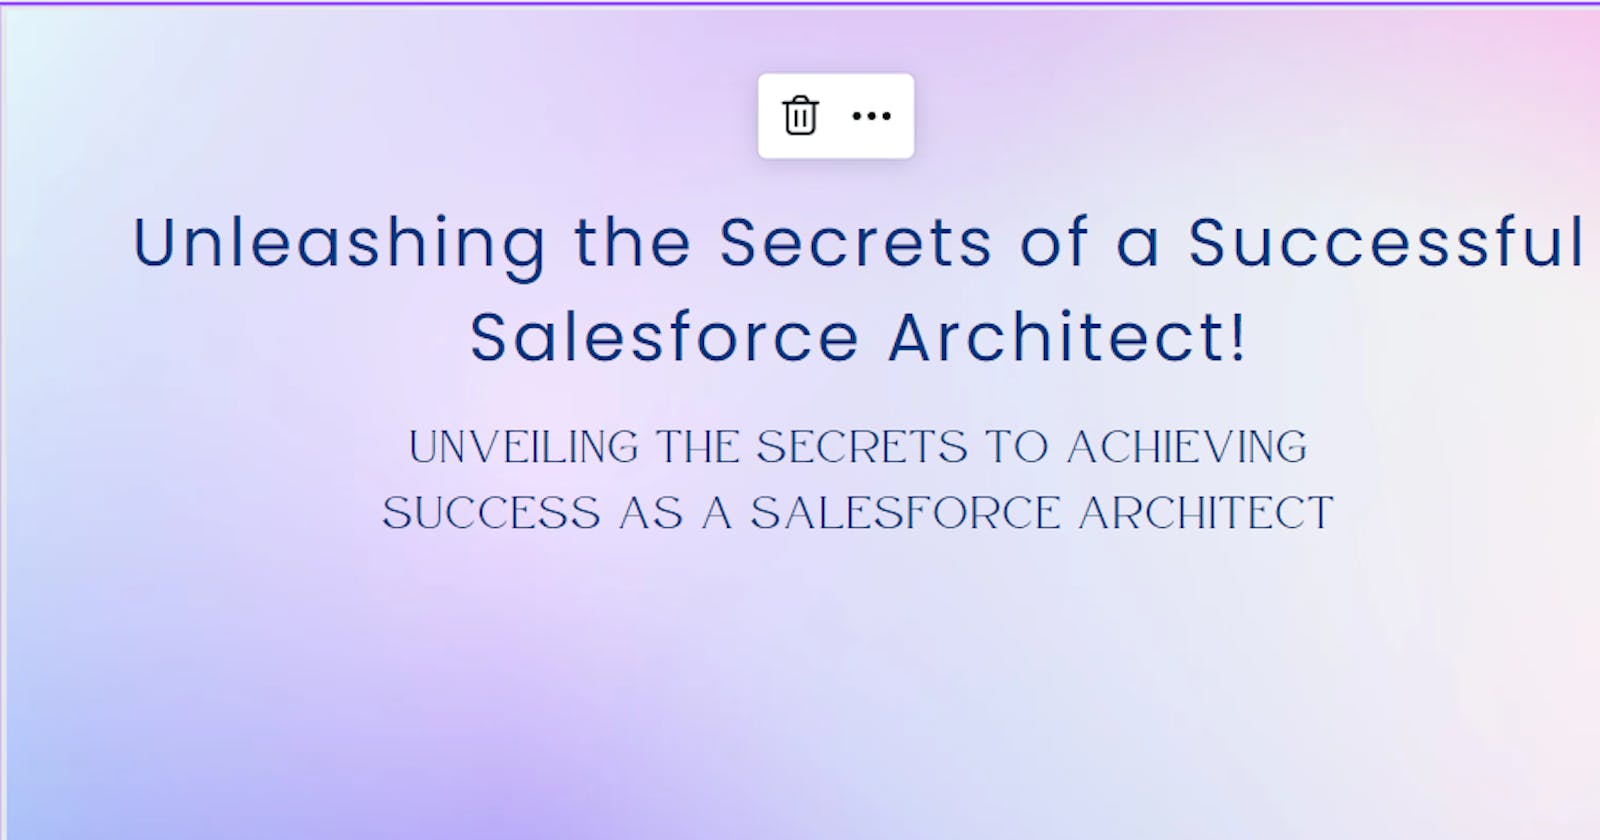 Unleashing the Secrets of a Successful Salesforce Architect!